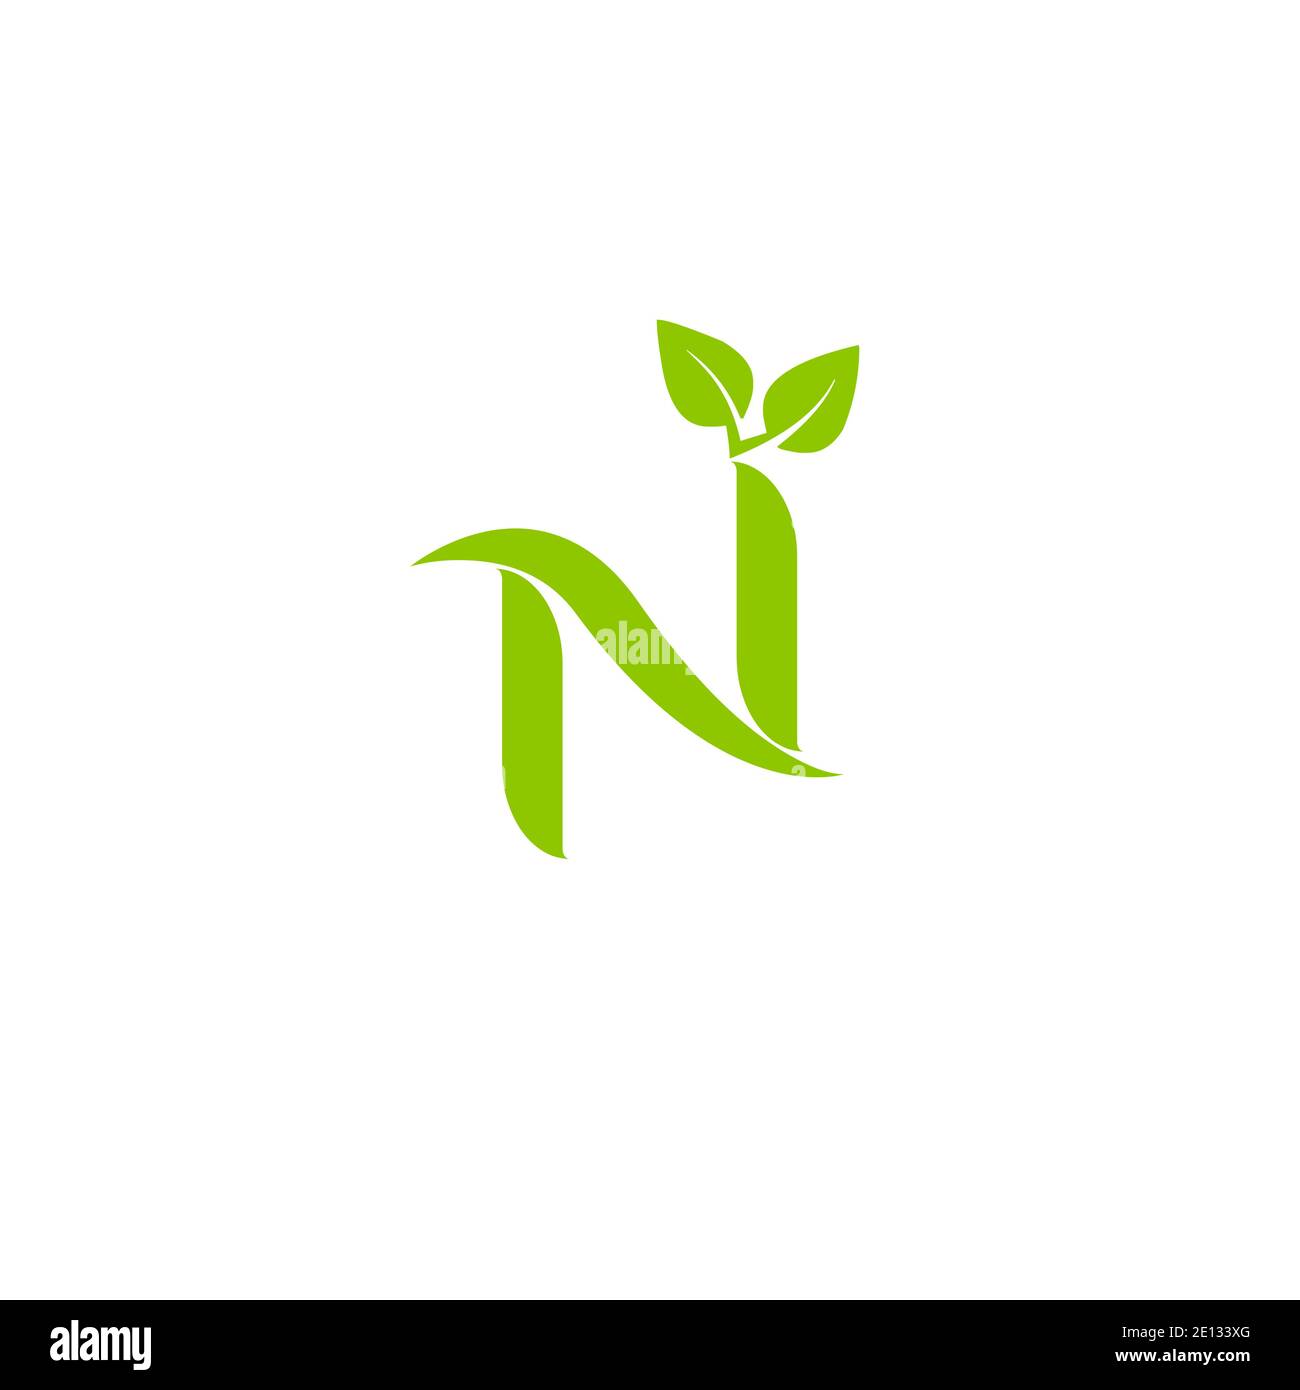 Share 72+ natural product logo latest - ceg.edu.vn